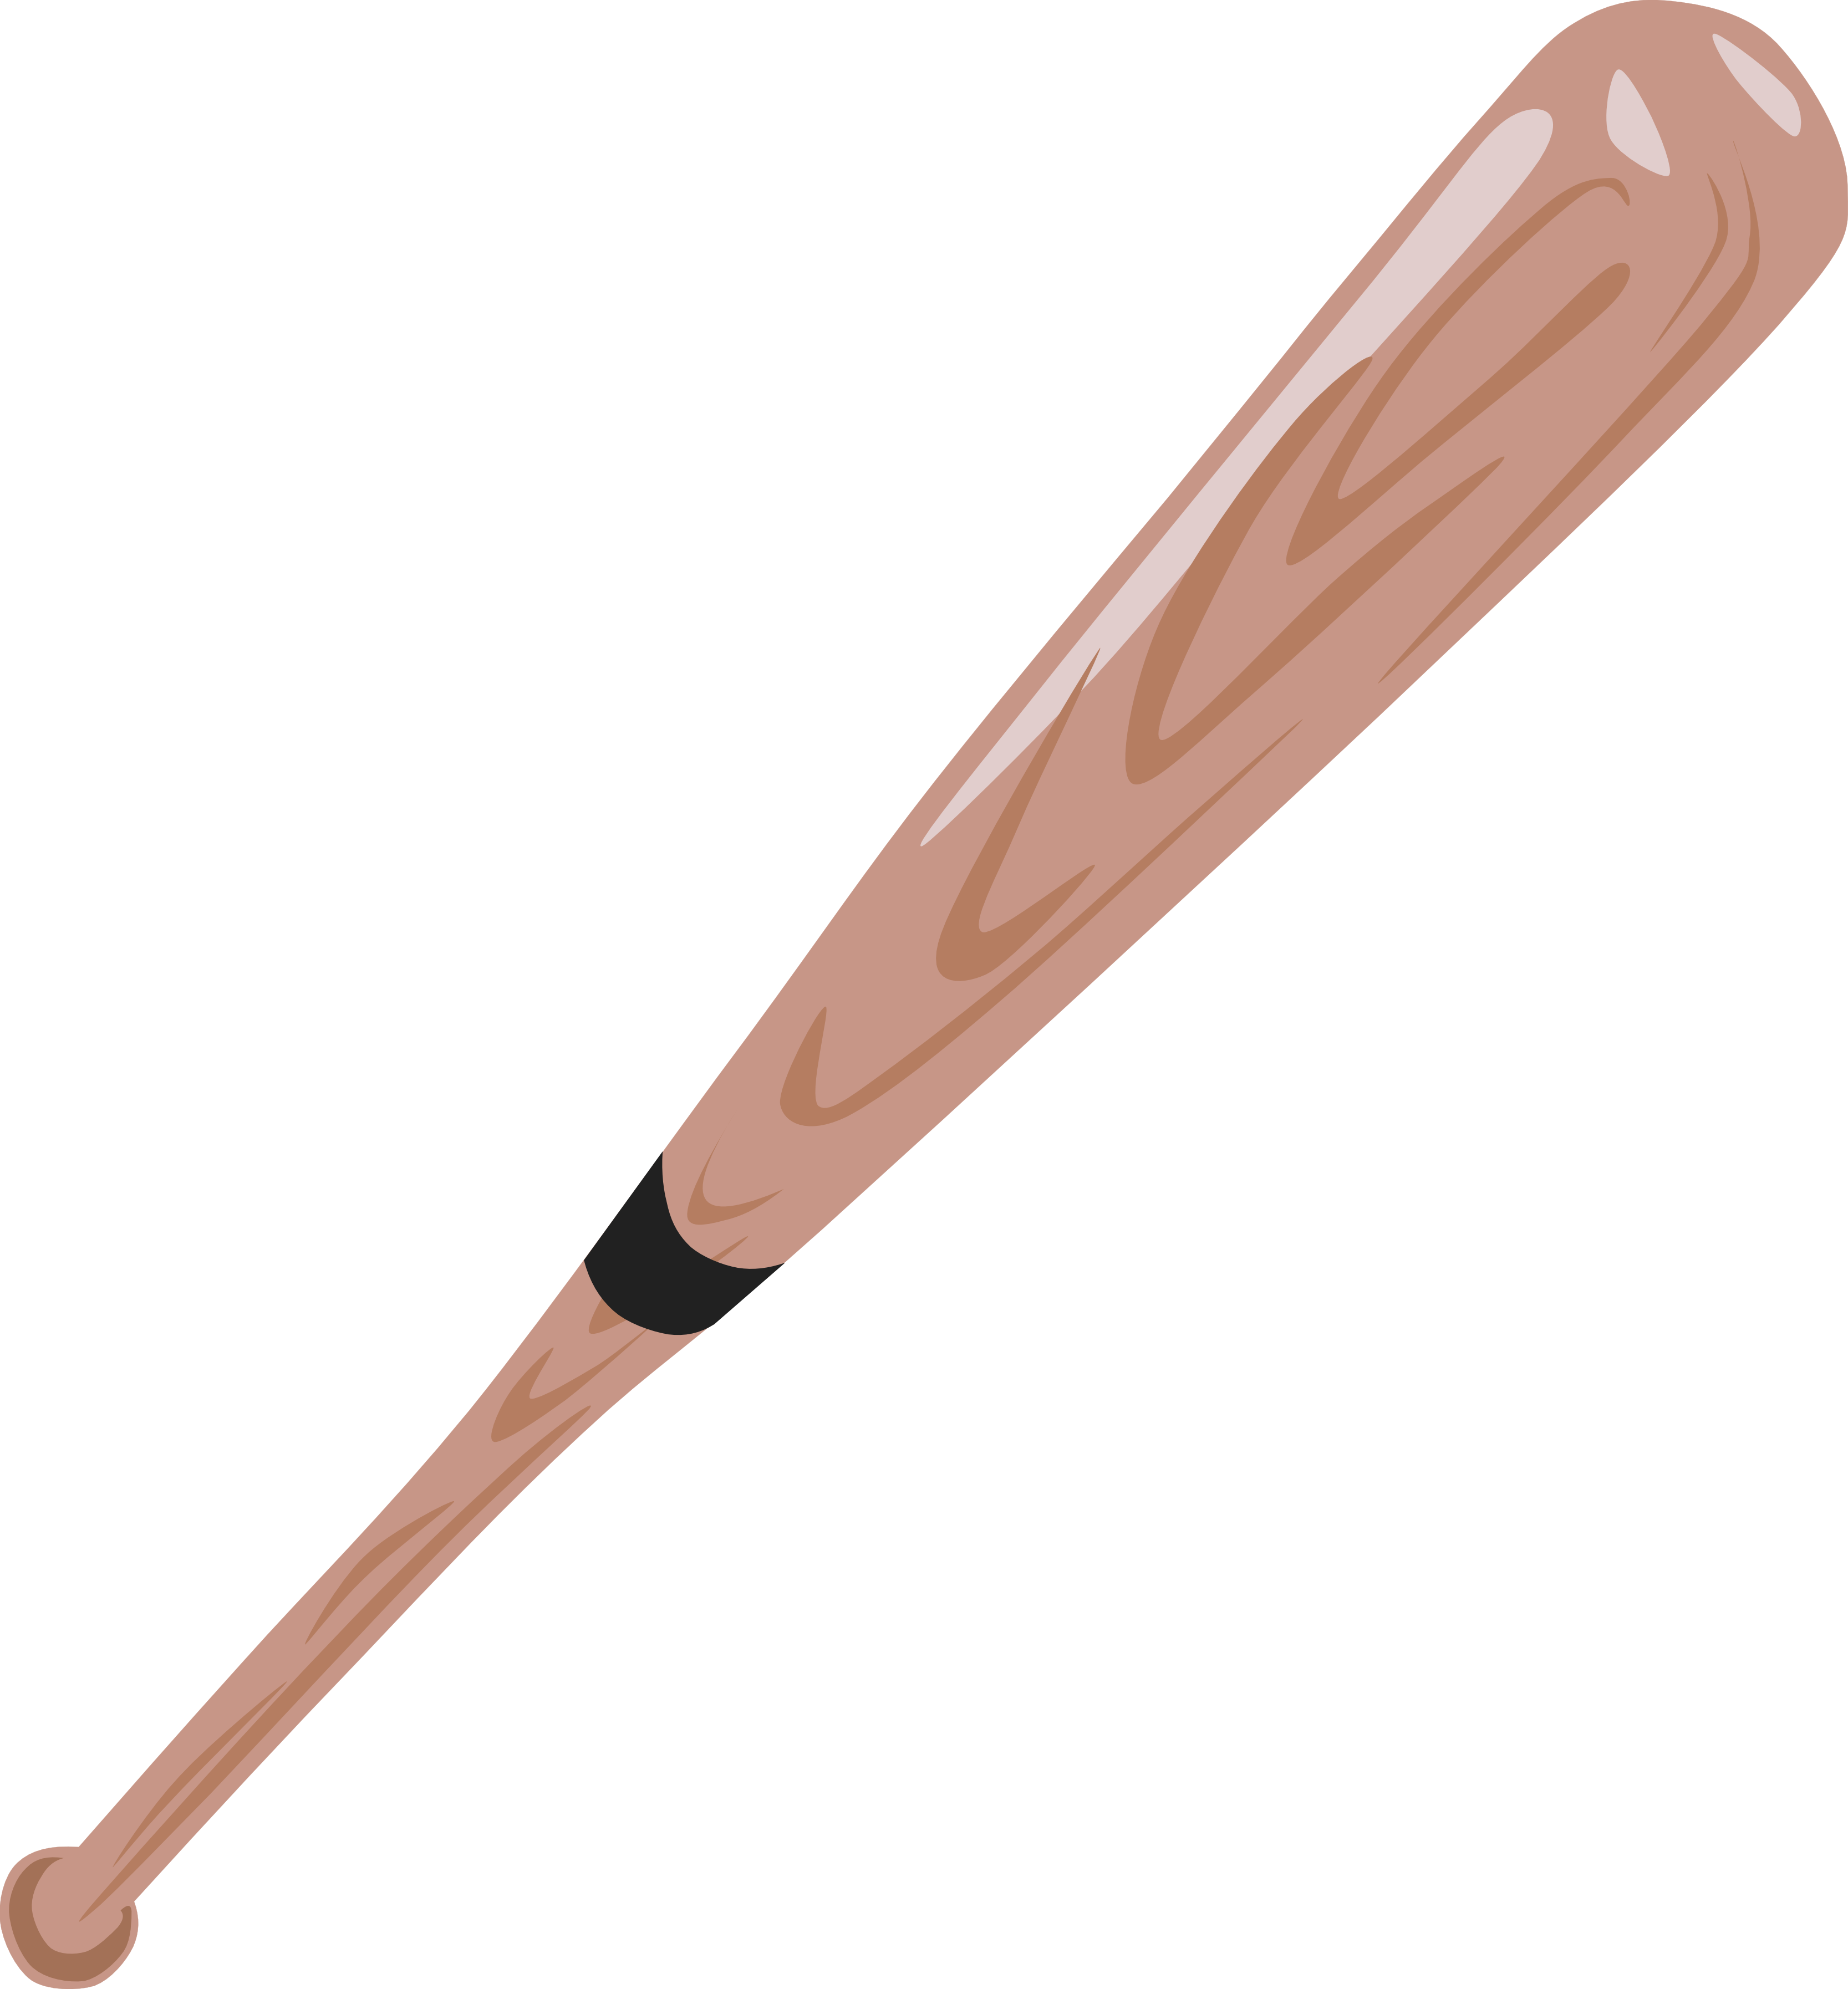 high quality baseball bat cliparts for #20653